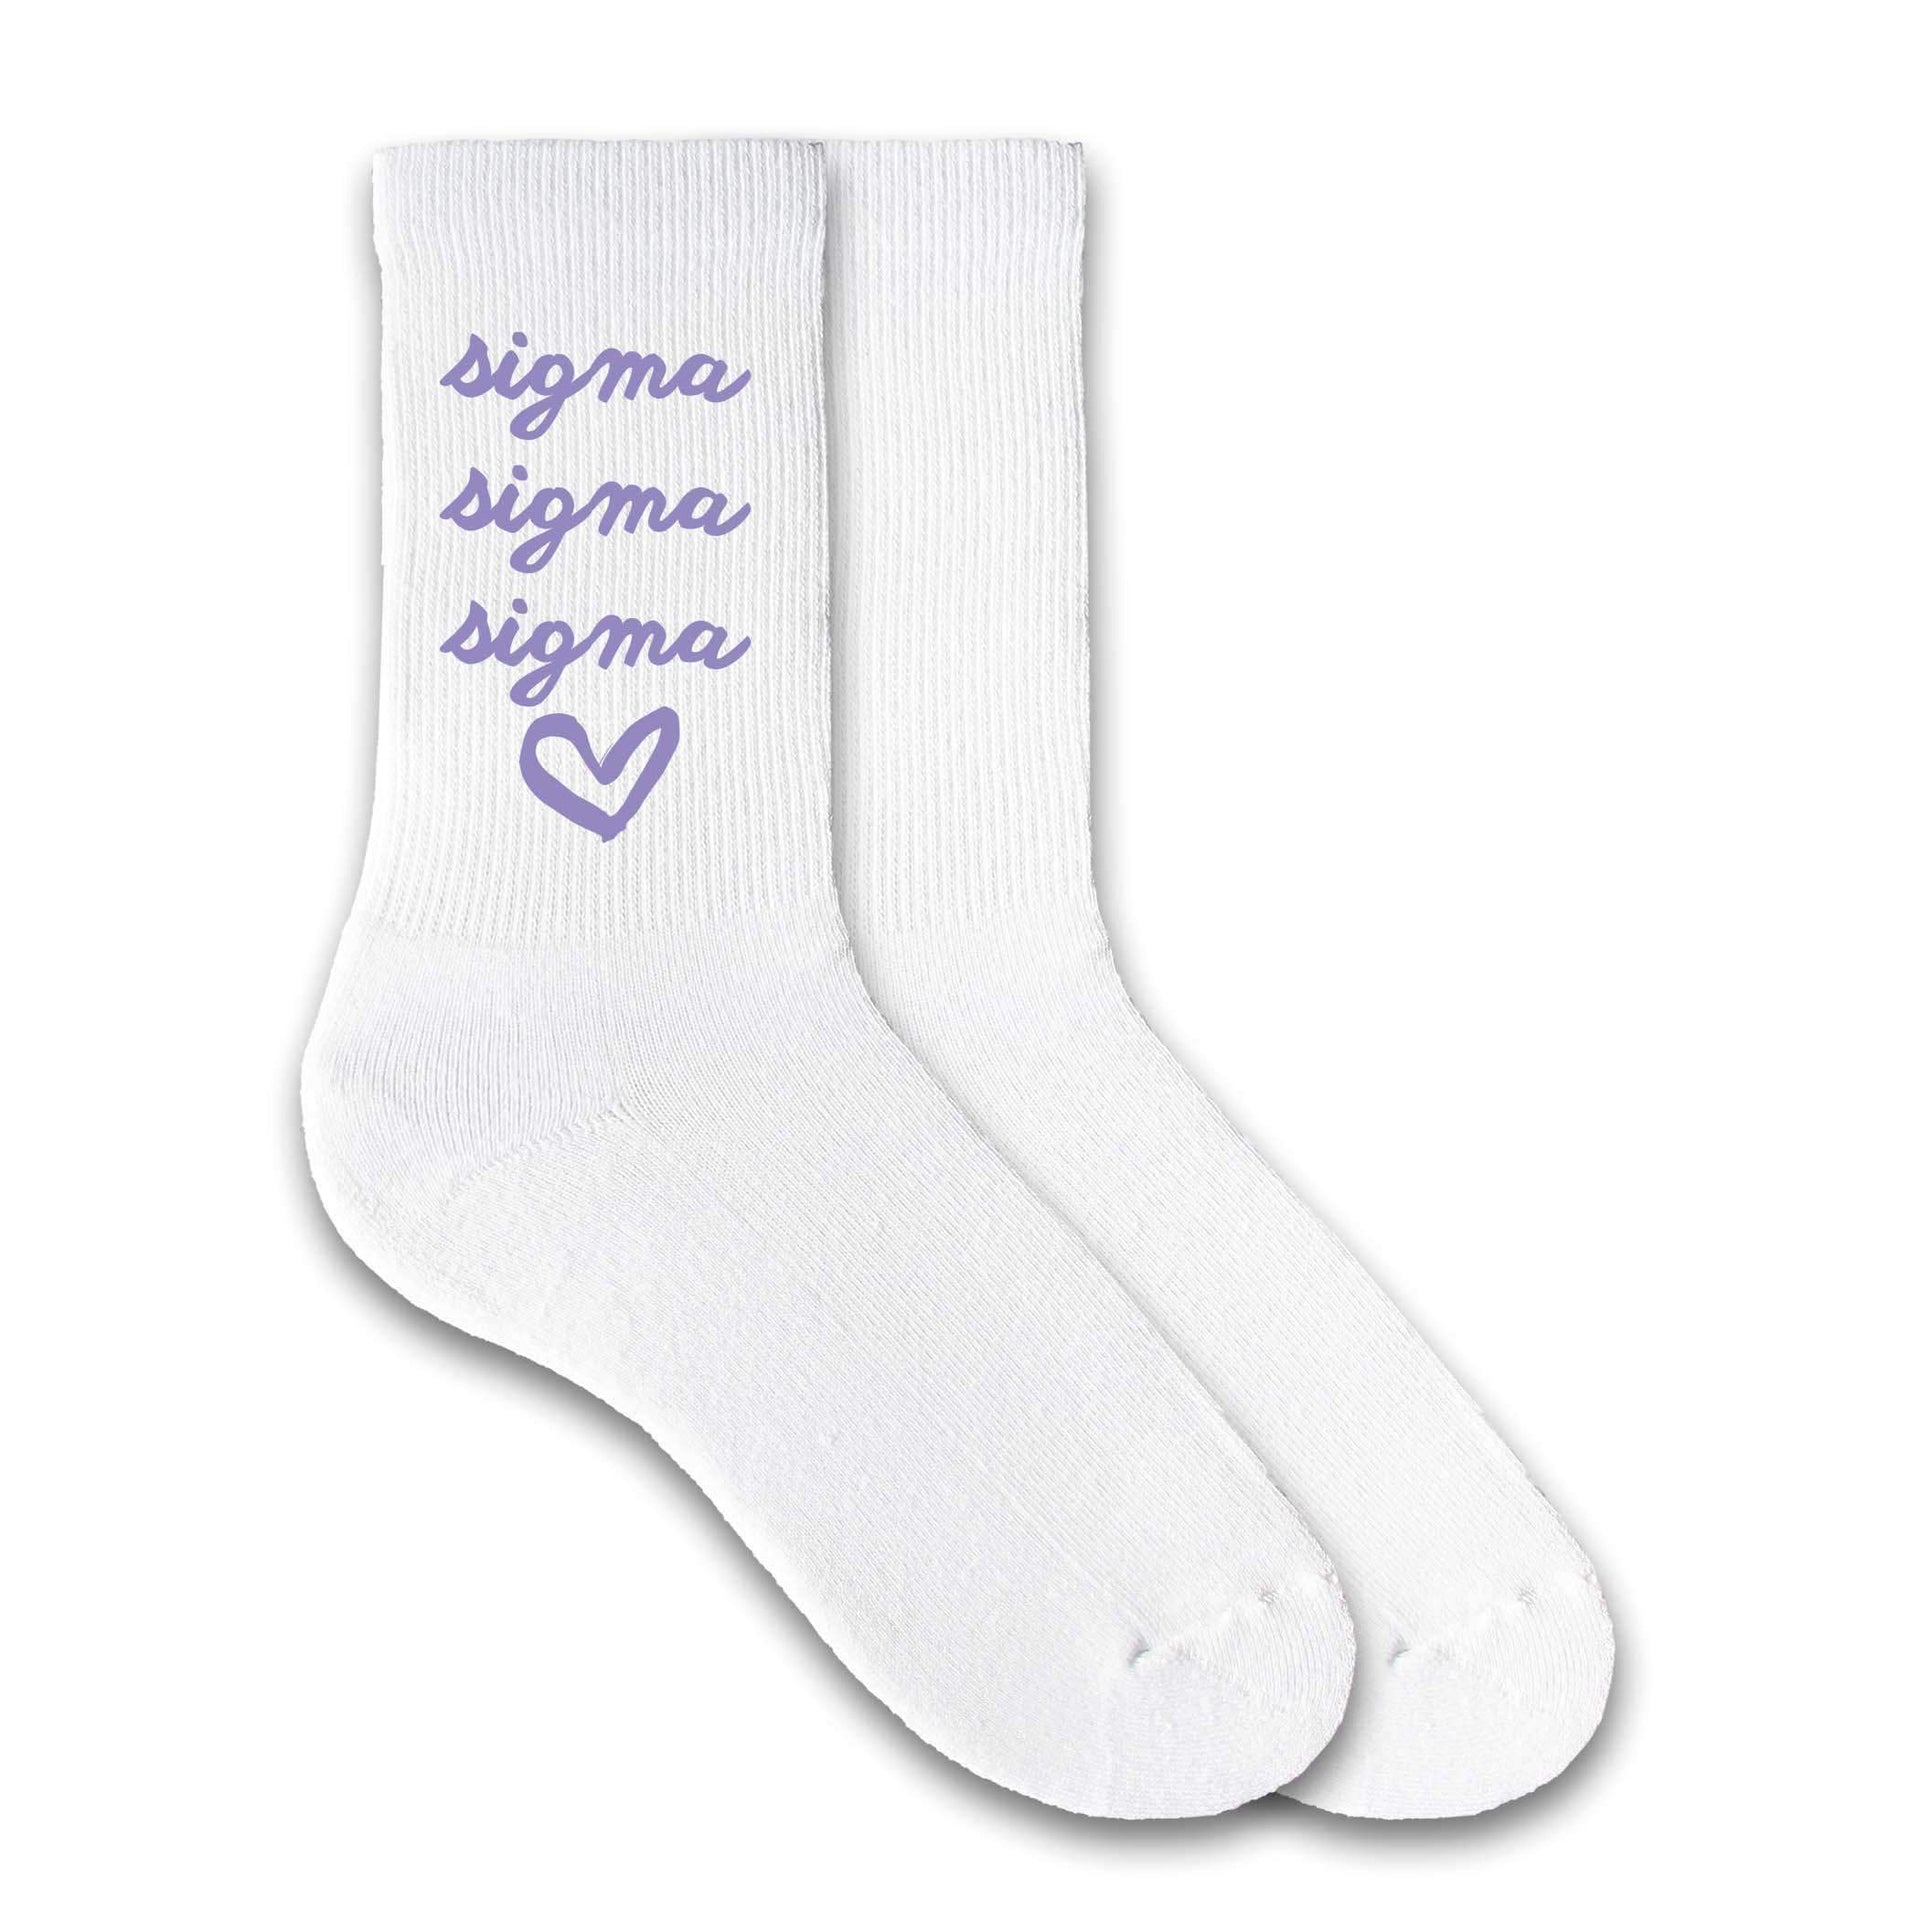 Sigma Sigma Sigma sorority name heart design custom printed on white cotton crew socks